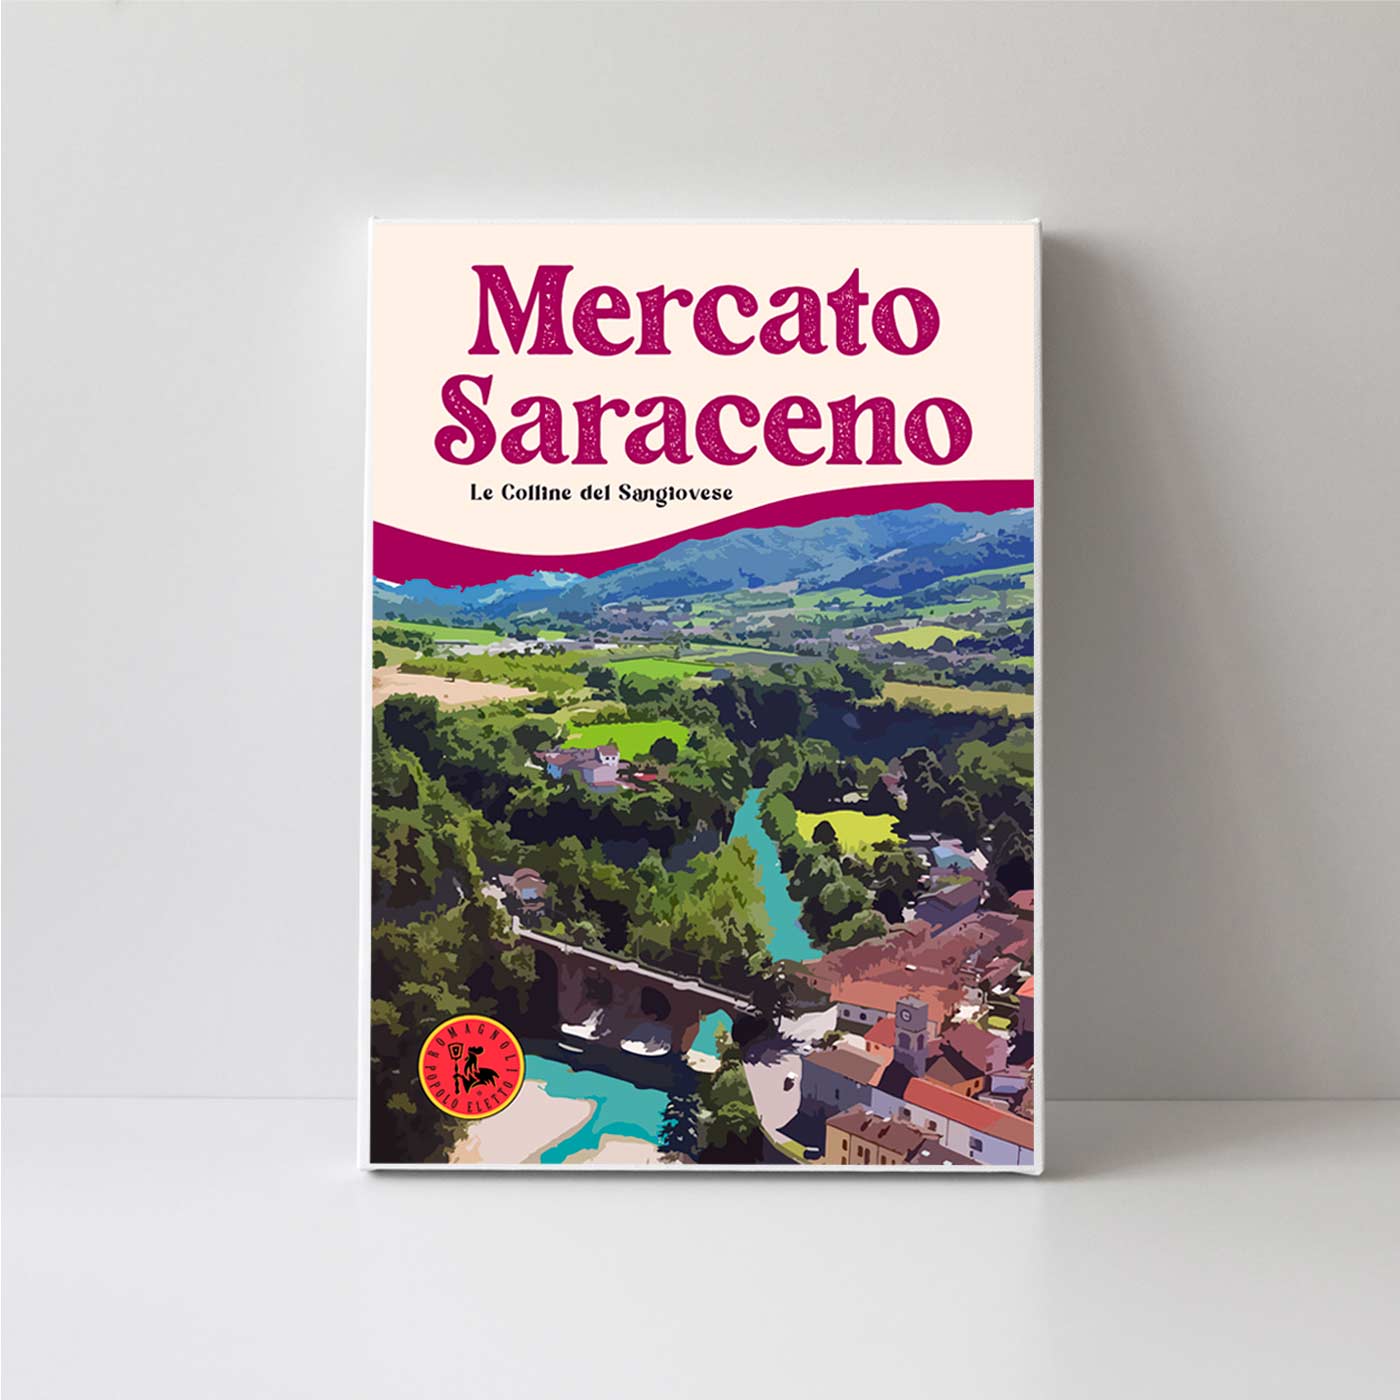 Stampa Mercato Saraceno